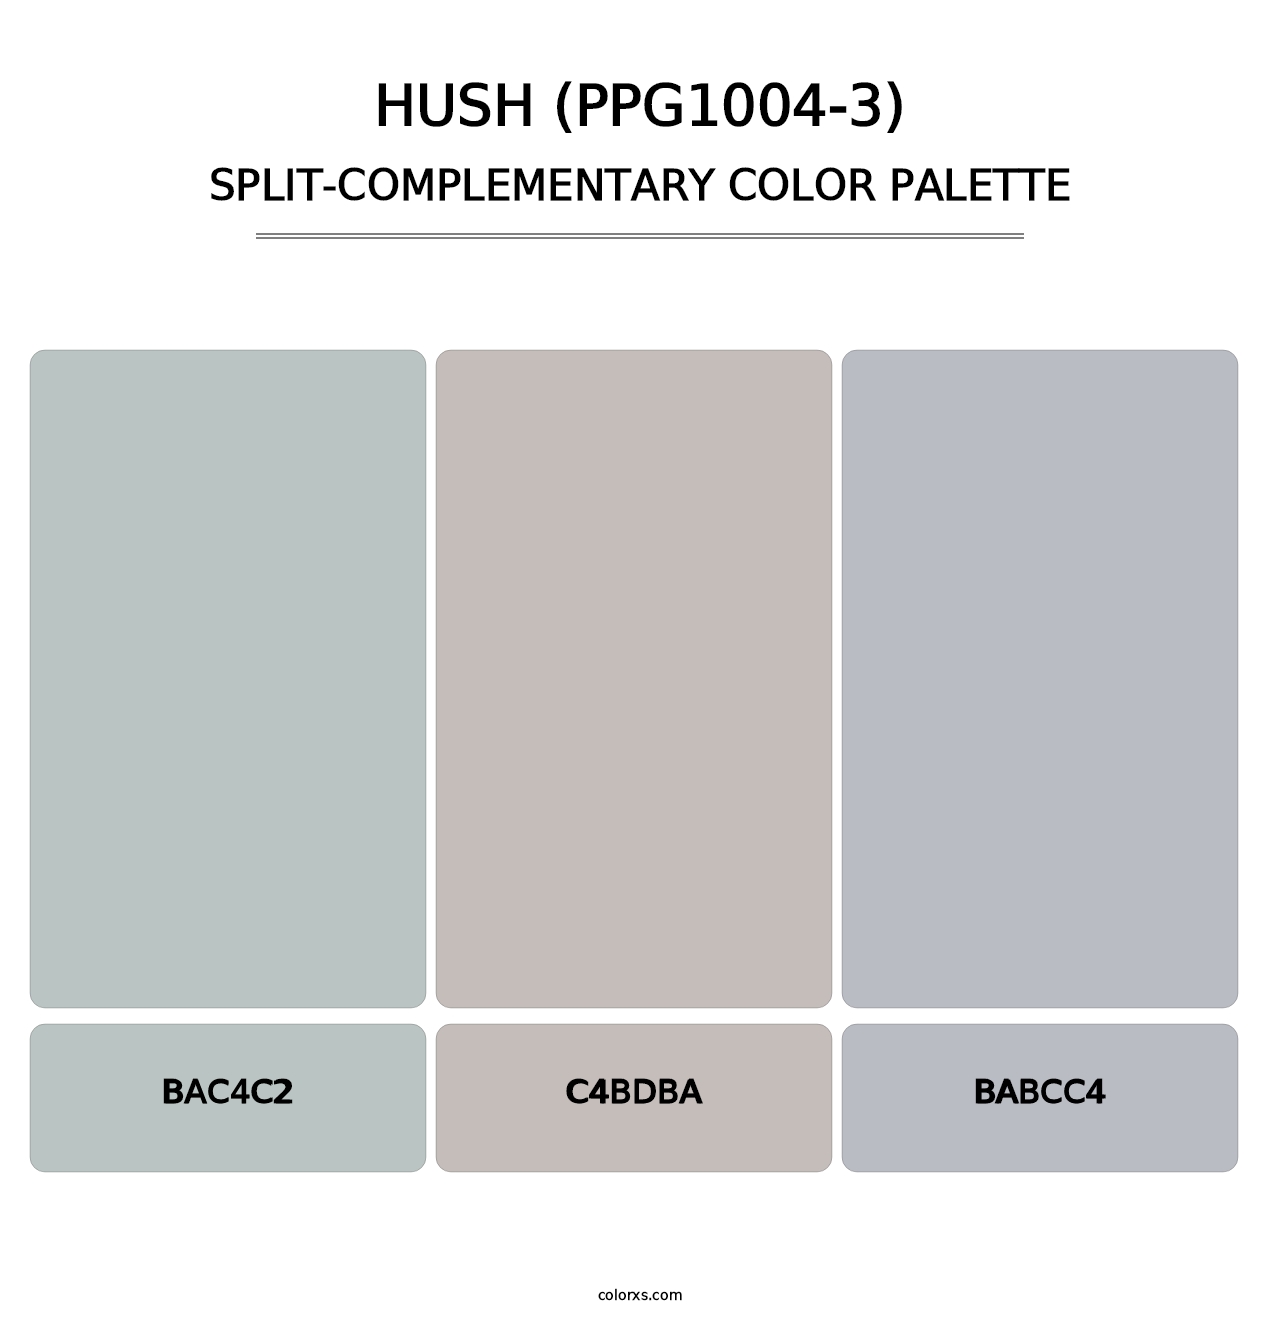 Hush (PPG1004-3) - Split-Complementary Color Palette